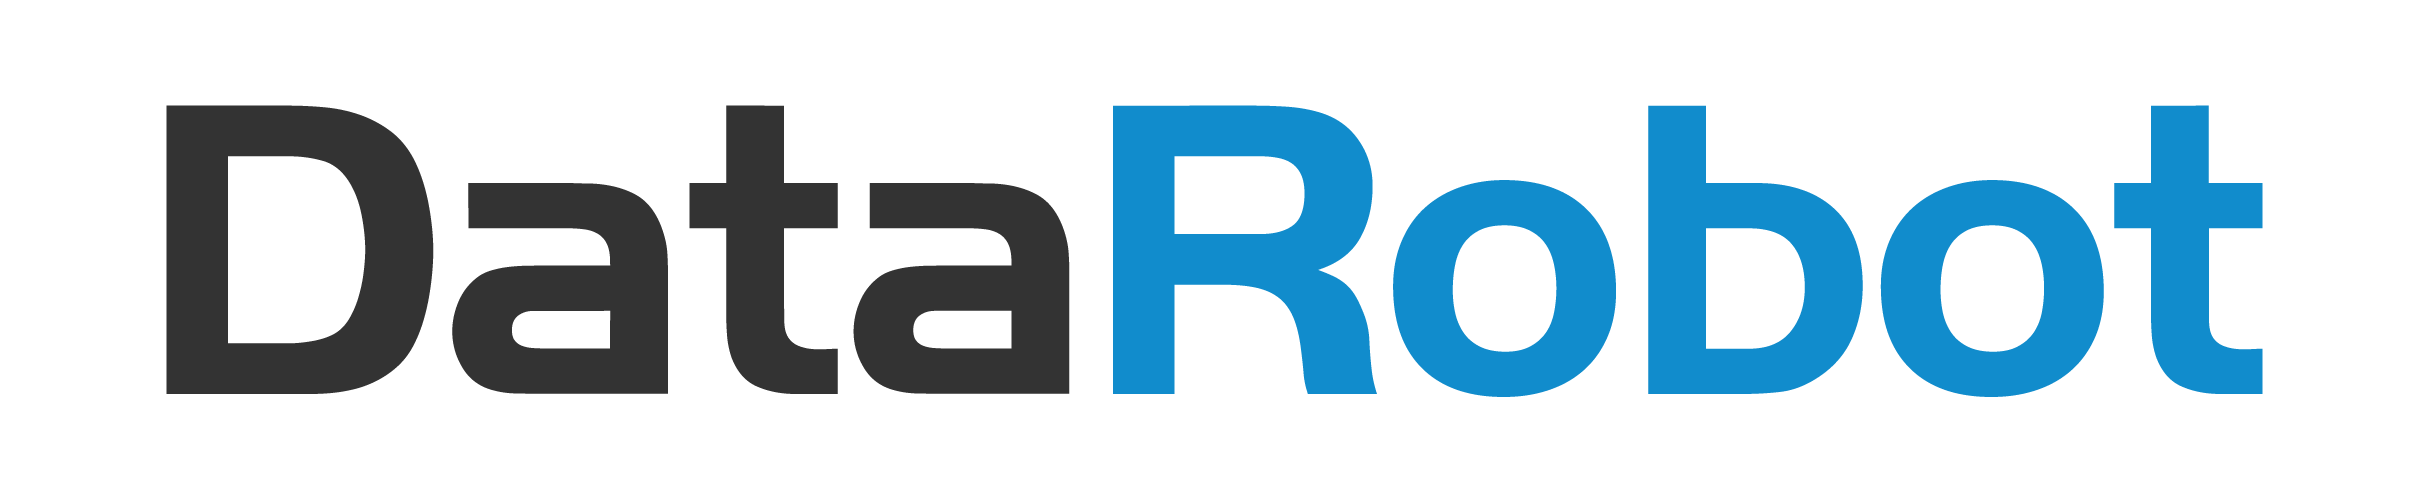 Data Robot Logo